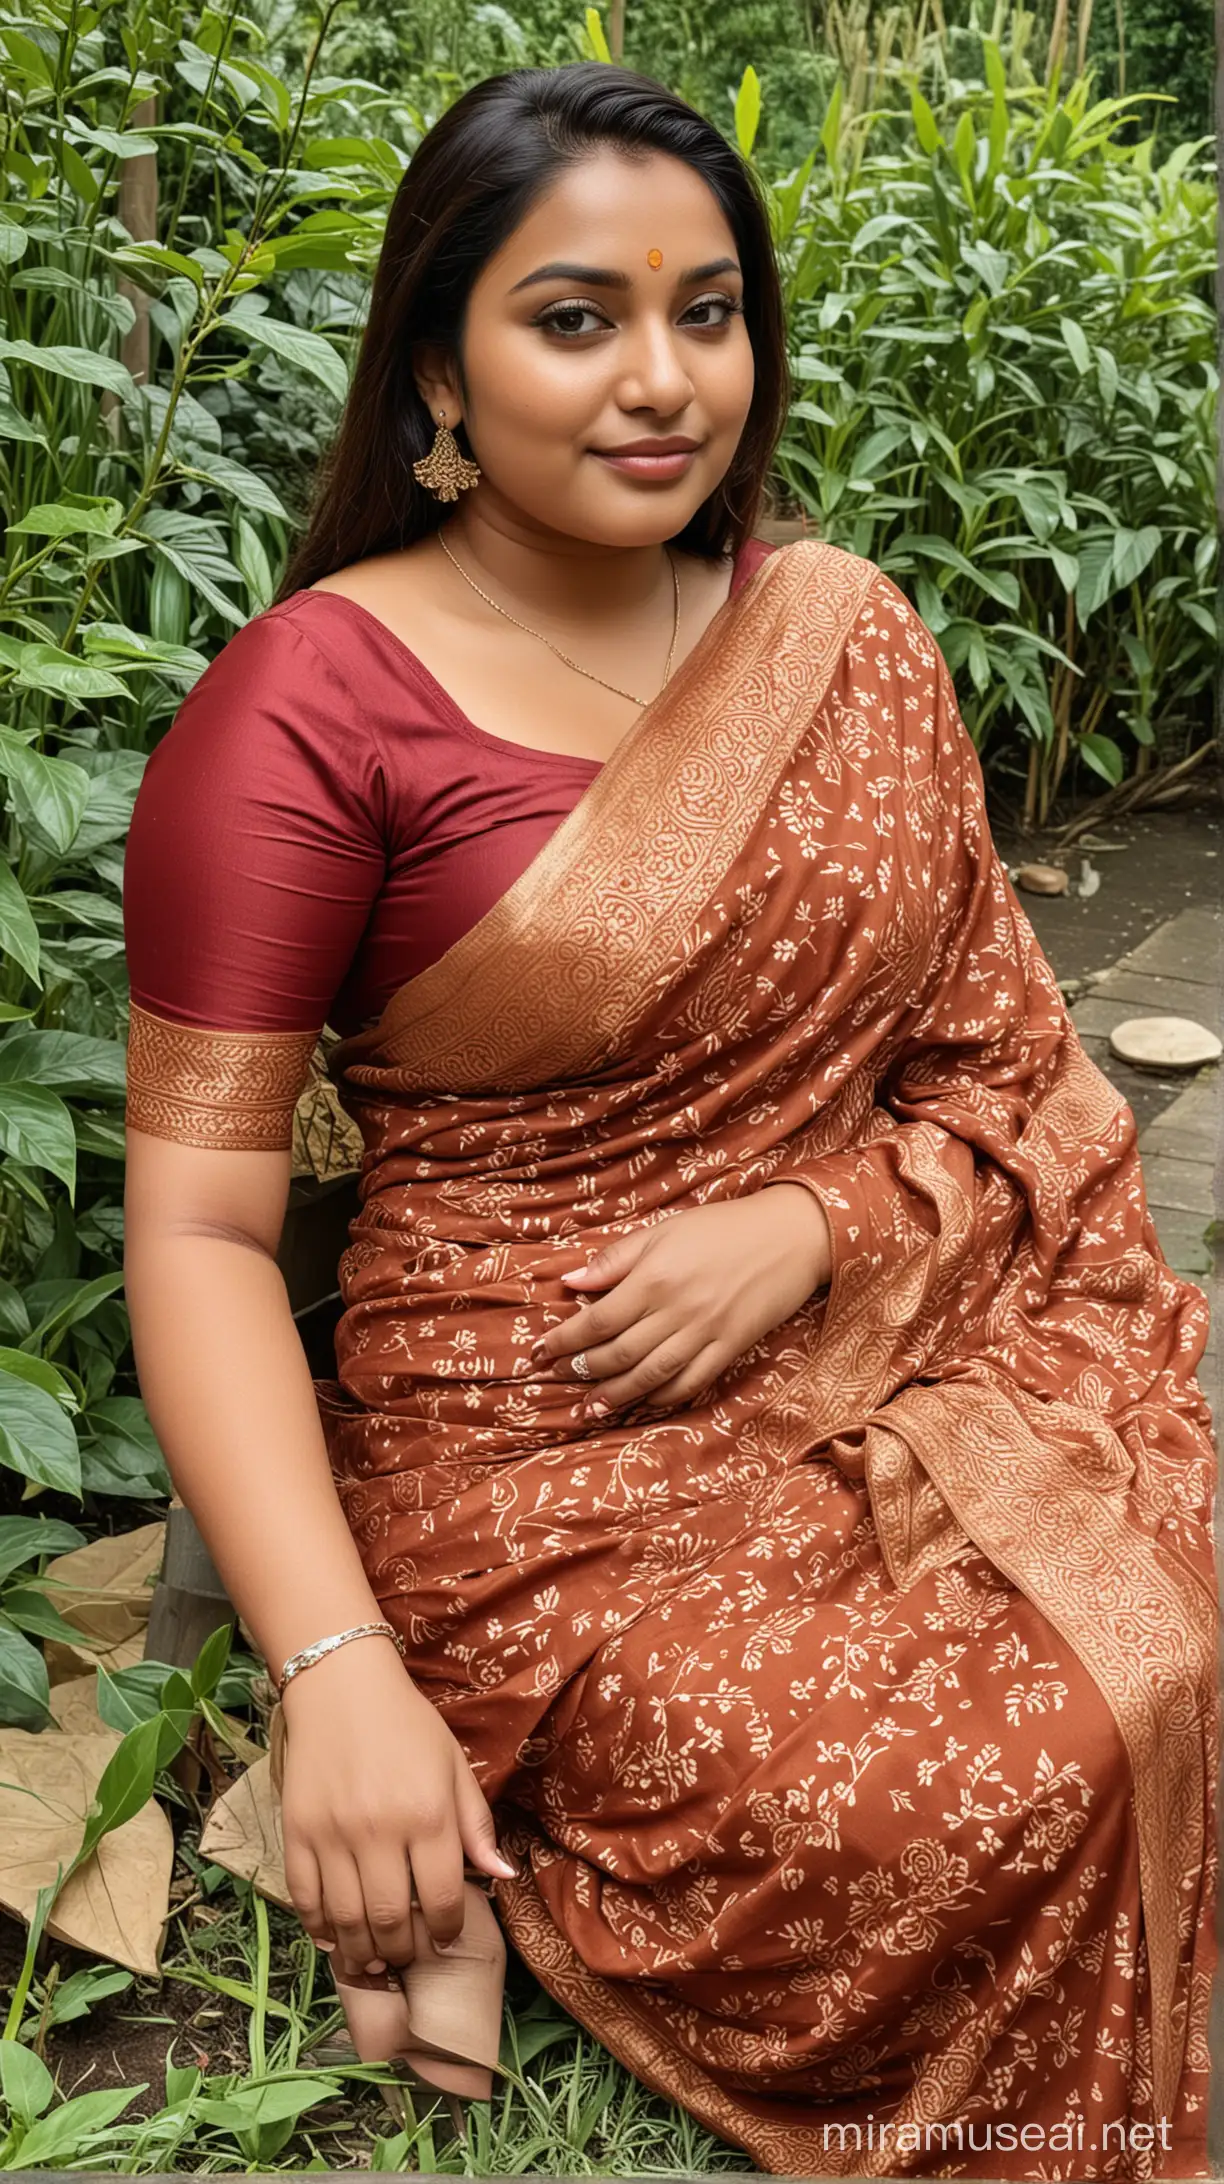 Bangladeshi Plus Size Woman in Traditional Saree Enjoying Garden Serenity